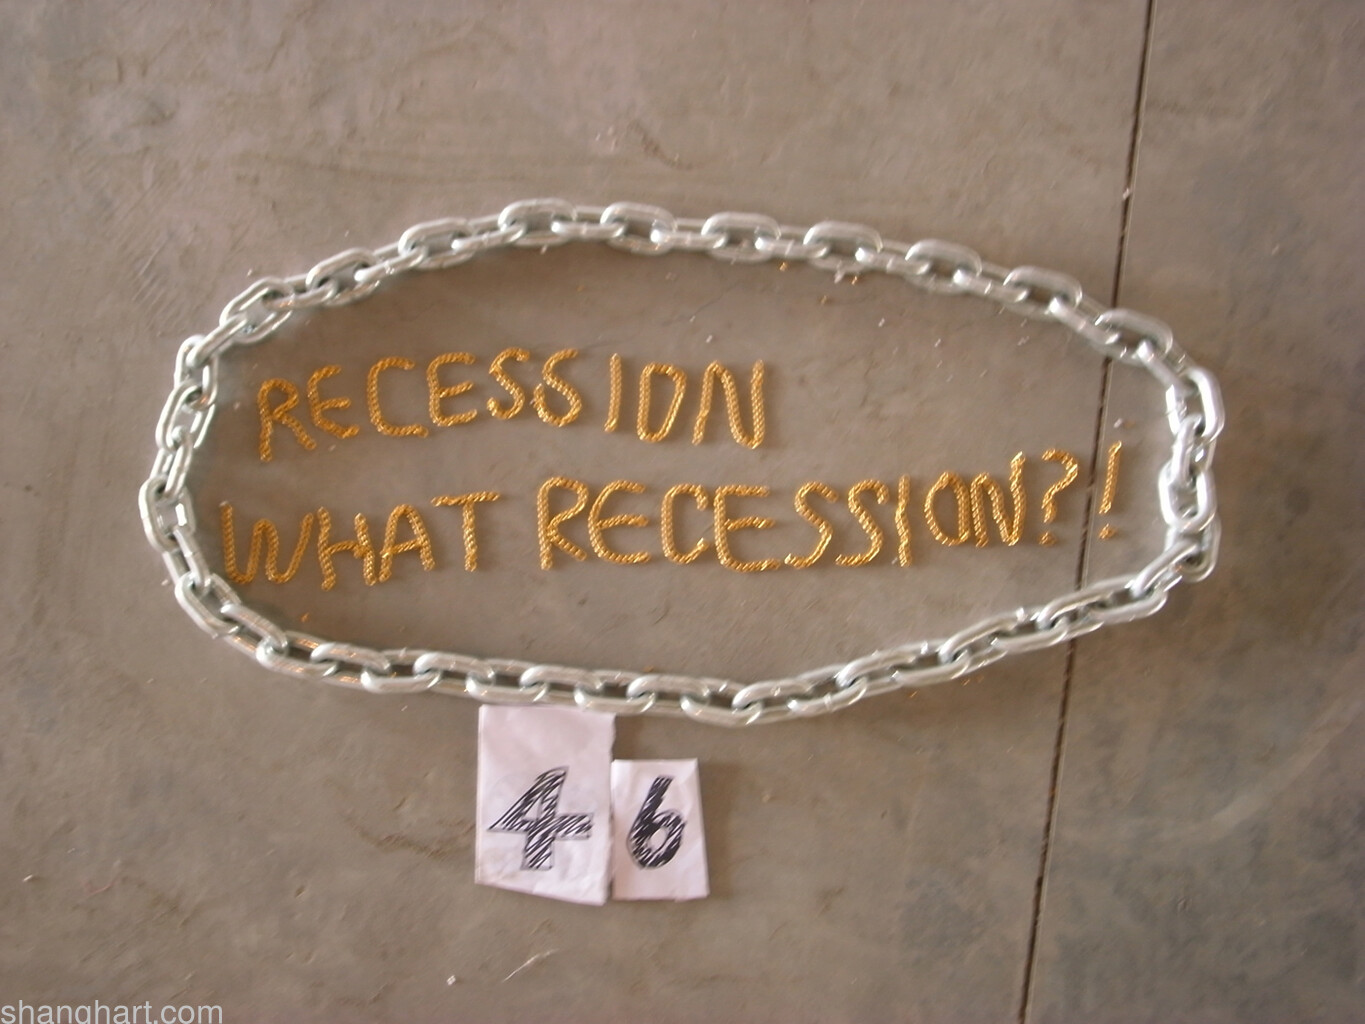 40x85cm recession what recession?!